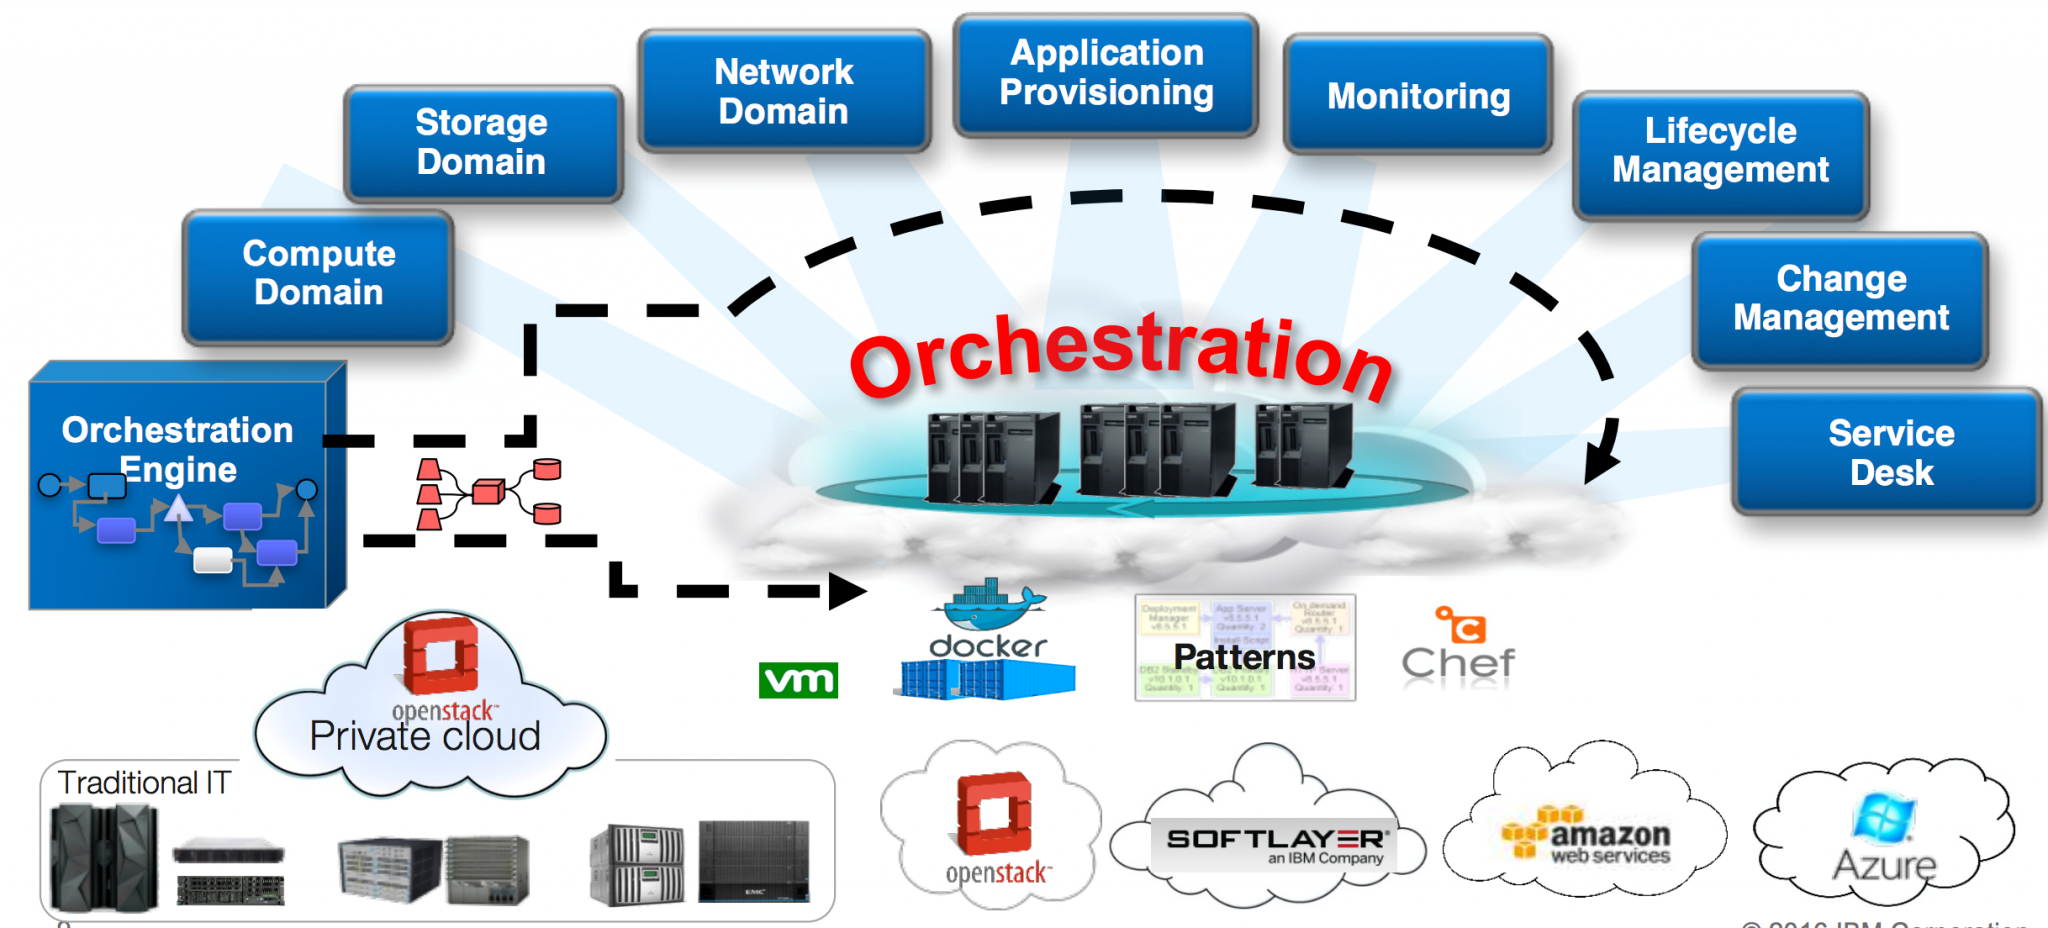 App domains. Orchestration. Data Orchestration. Network cloud учредители. Cloud Storage infrastructure.